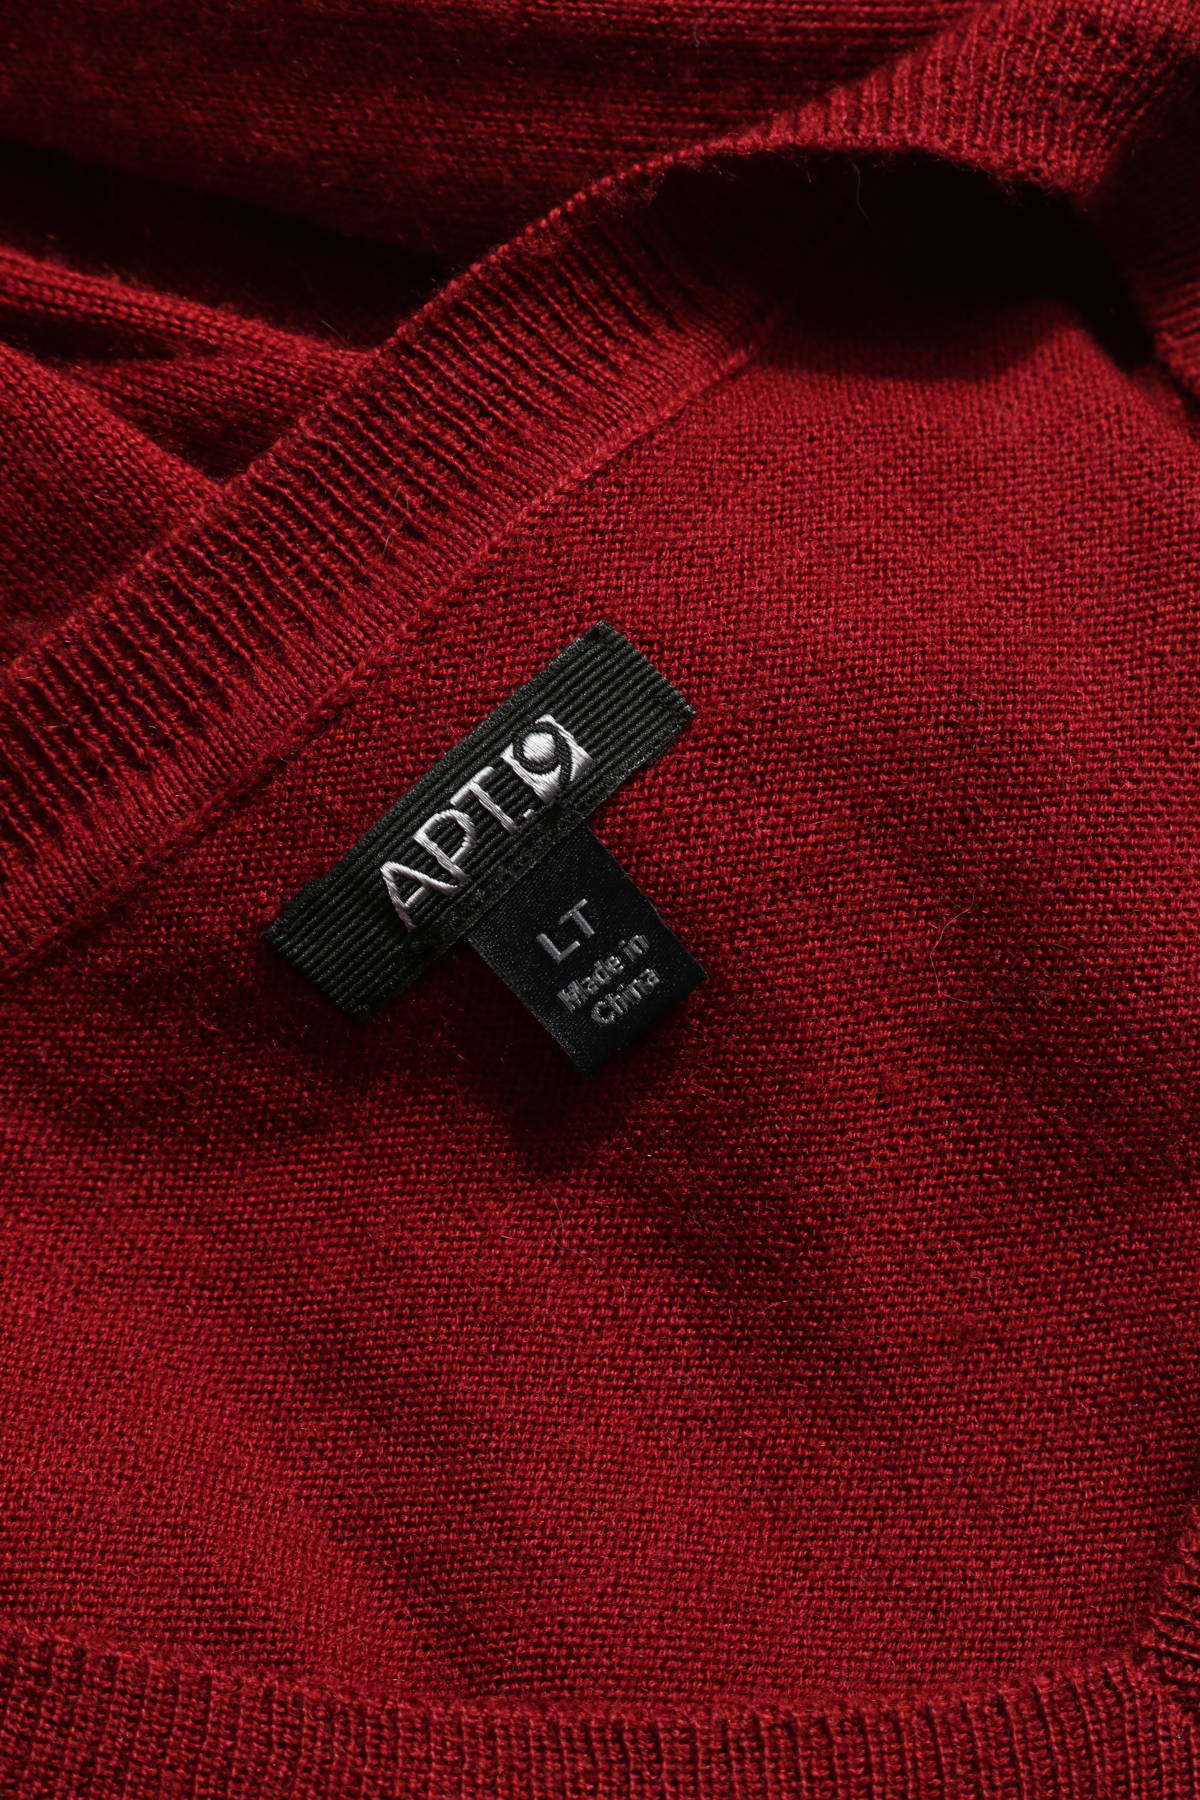 Пуловер APT.93